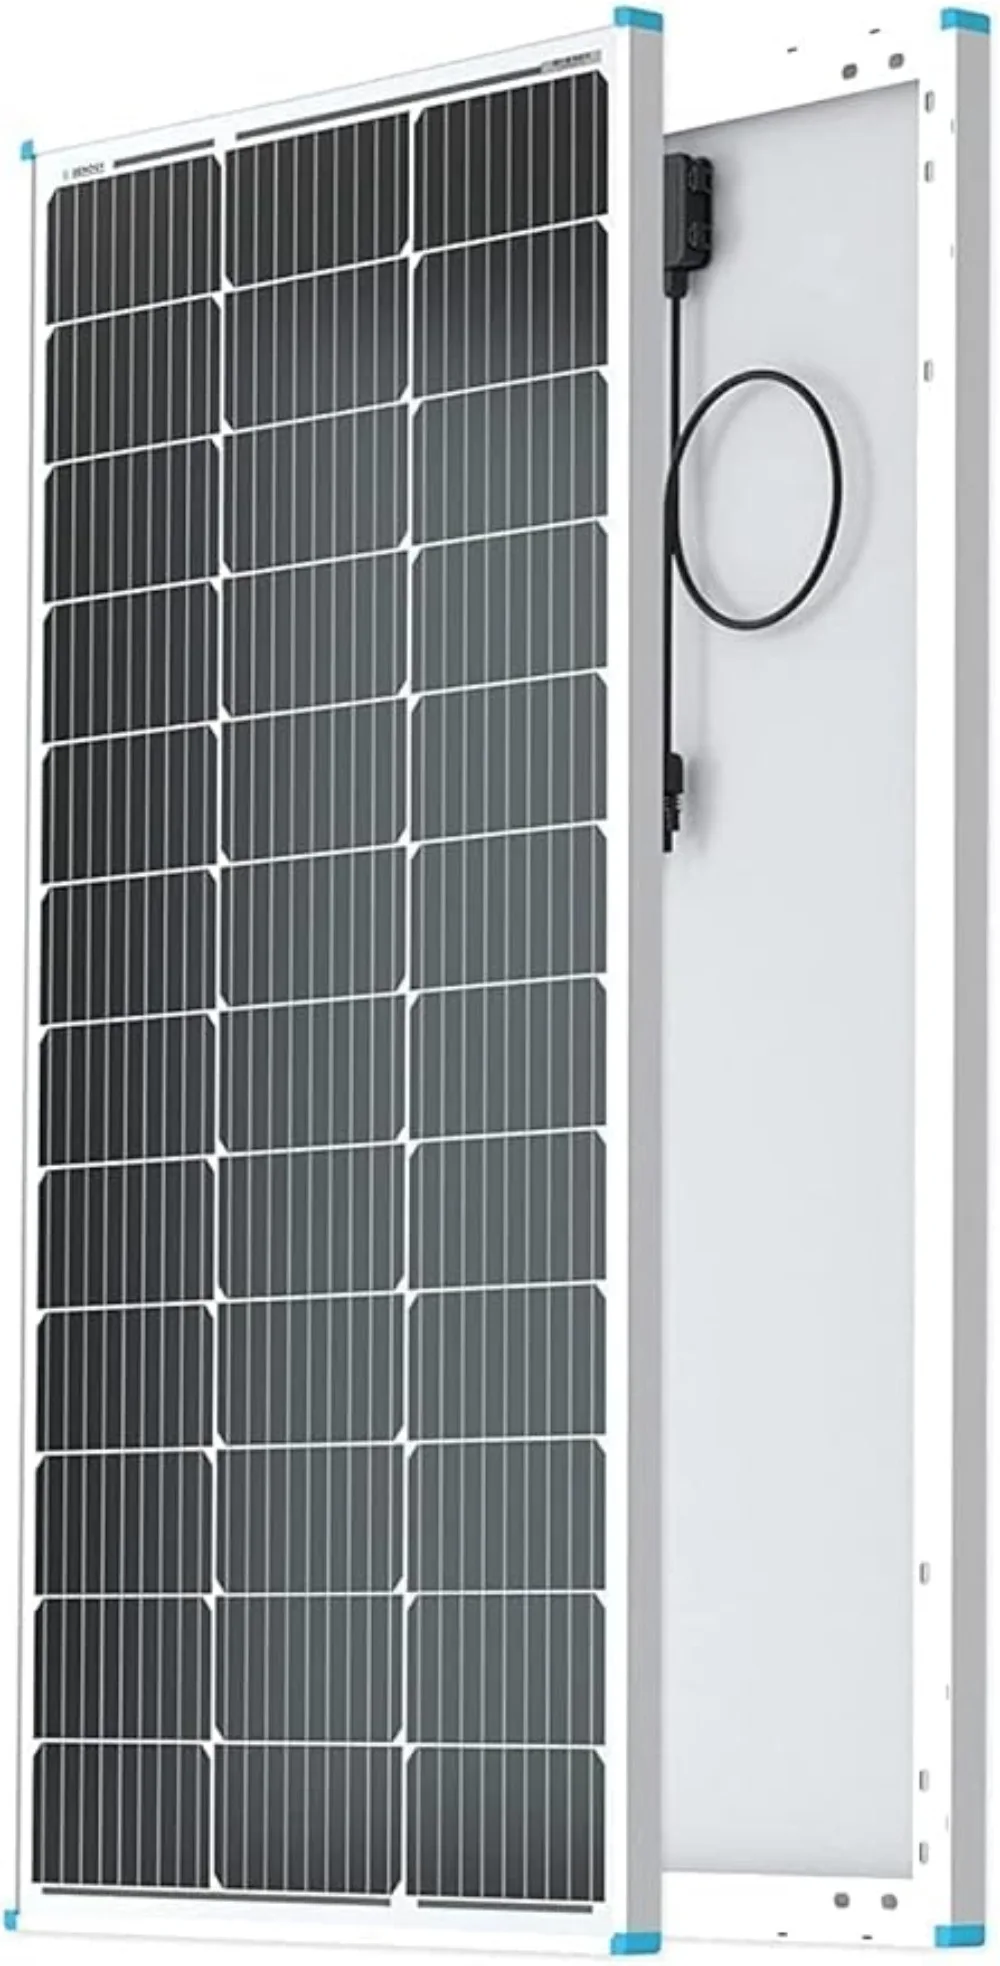 

Solar Panel 100 Watt 12 Volt, High-Efficiency Monocrystalline PV Module Power Charger for RV Marine Rooftop Farm Battery